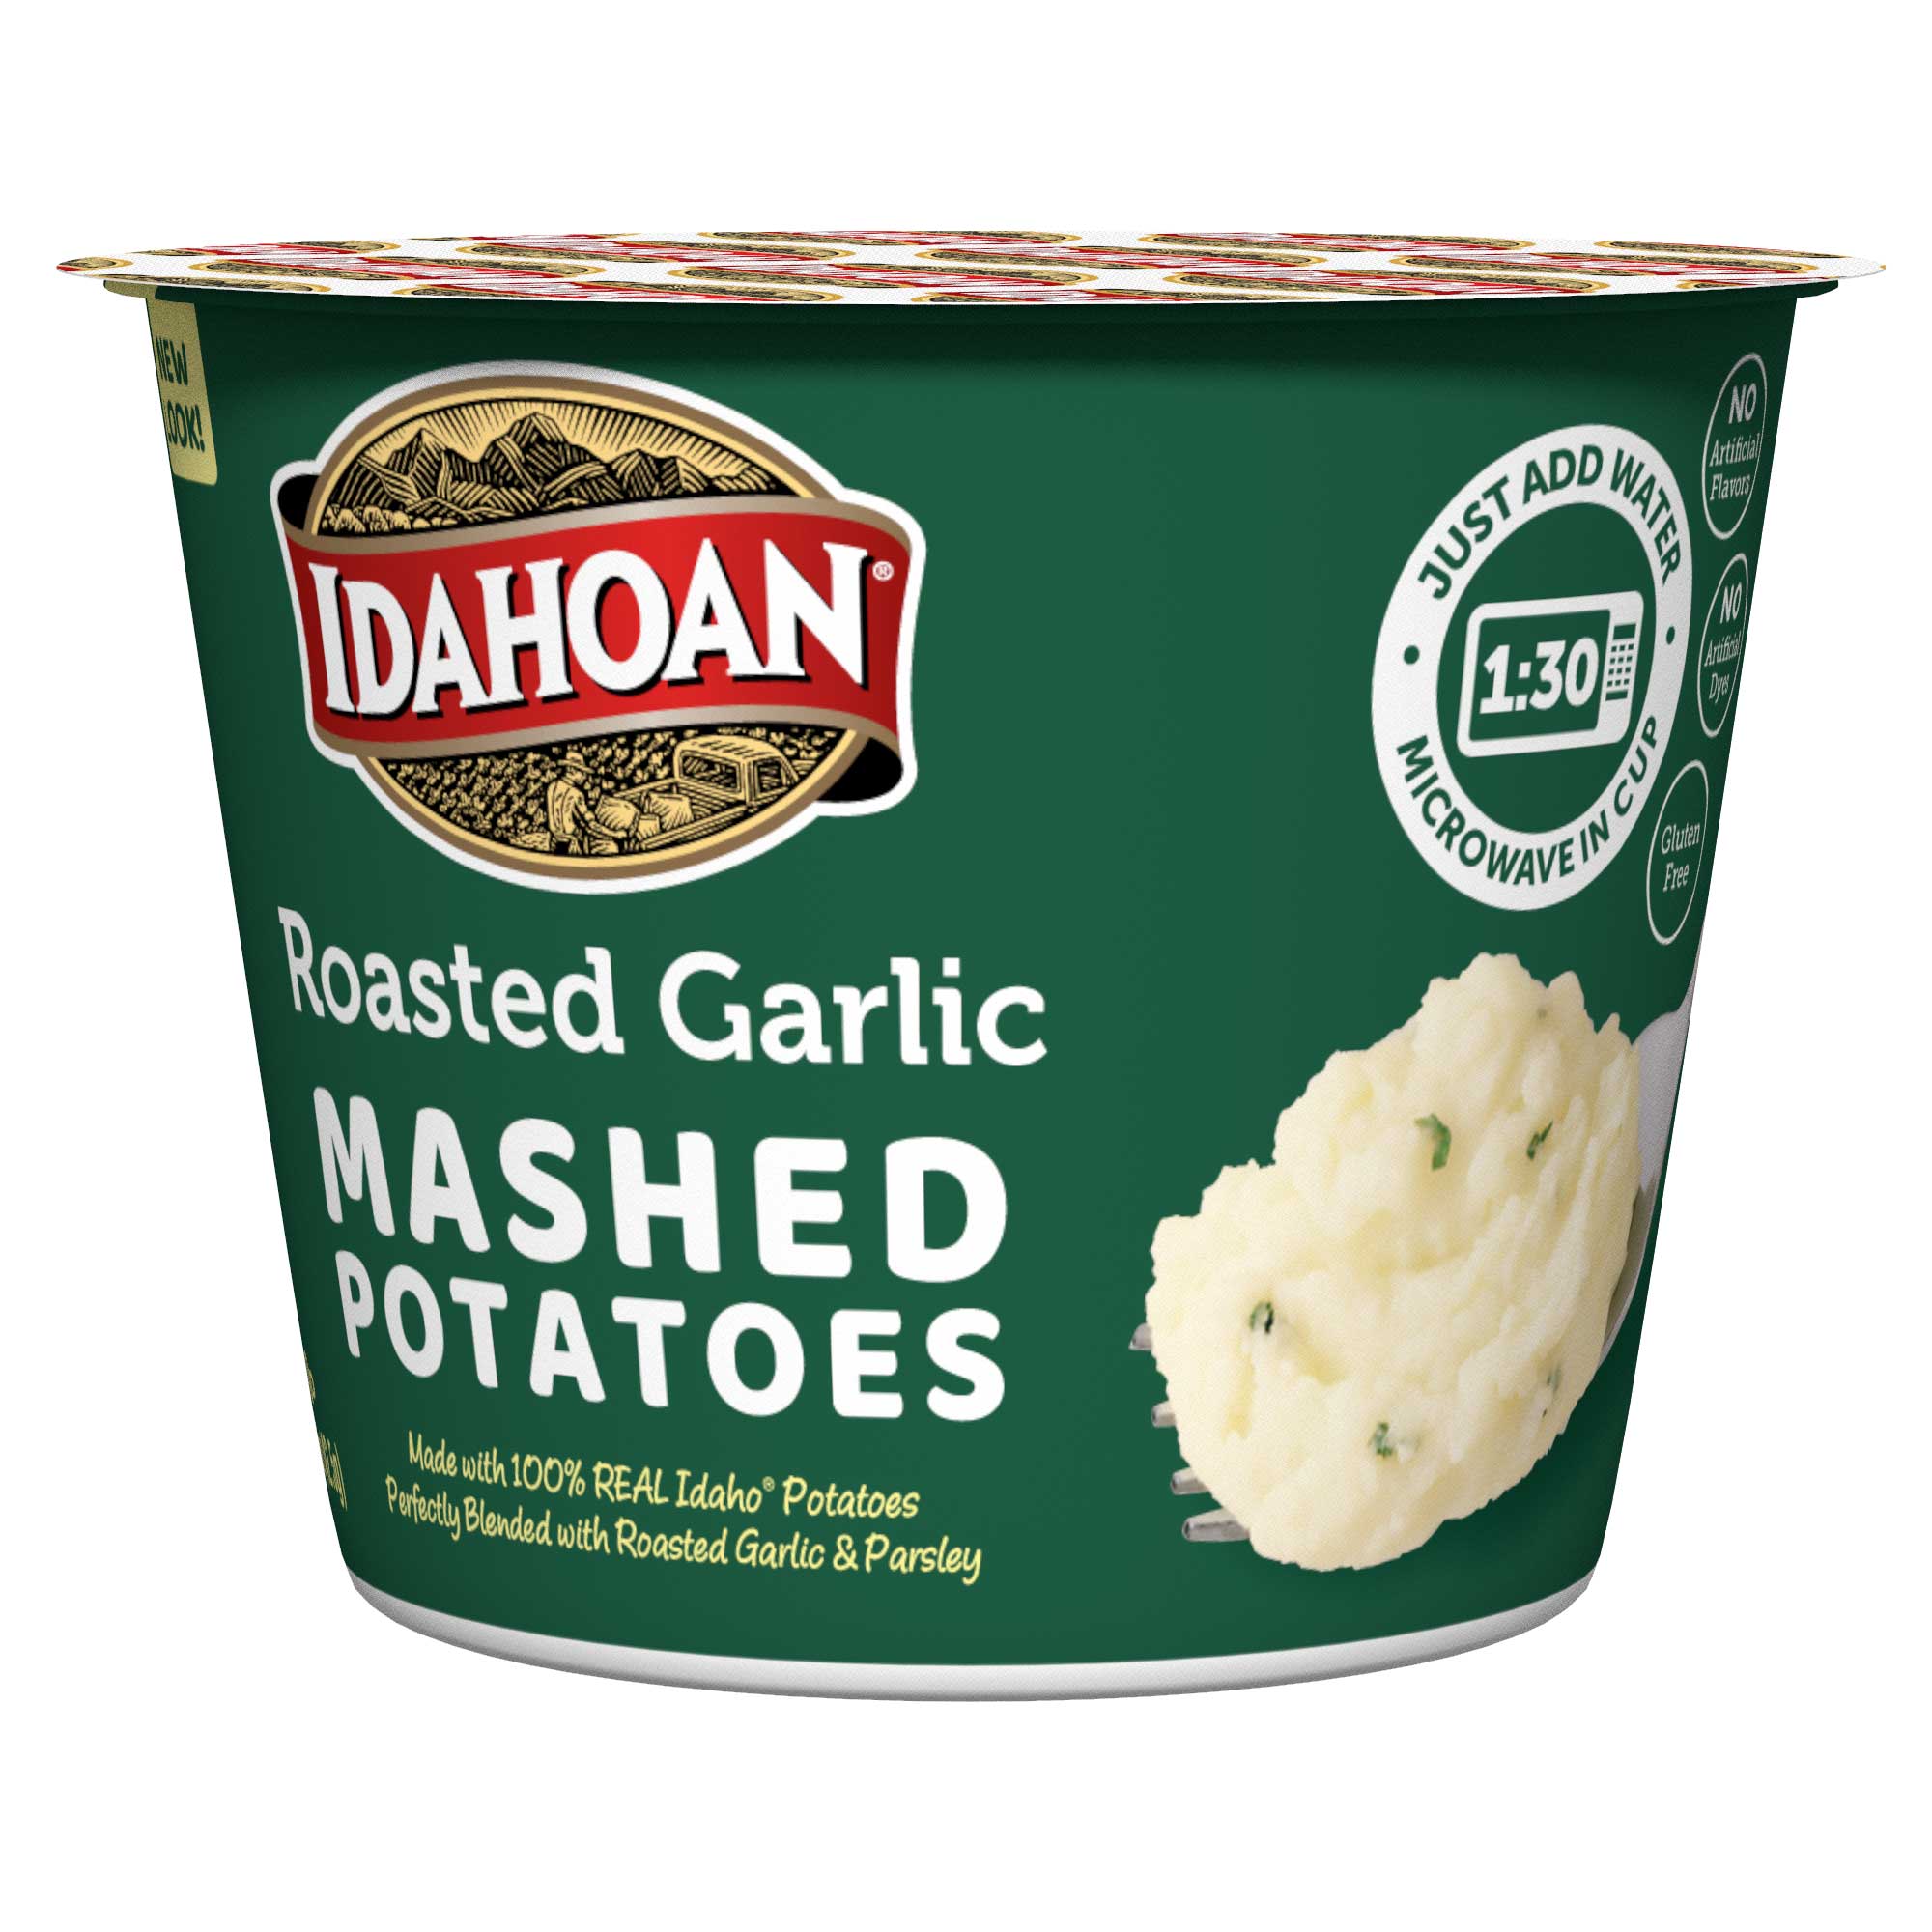 Idahoan Roasted Garlic Mashed Potato Cup, 1.5 Ounce -- 10 per case.